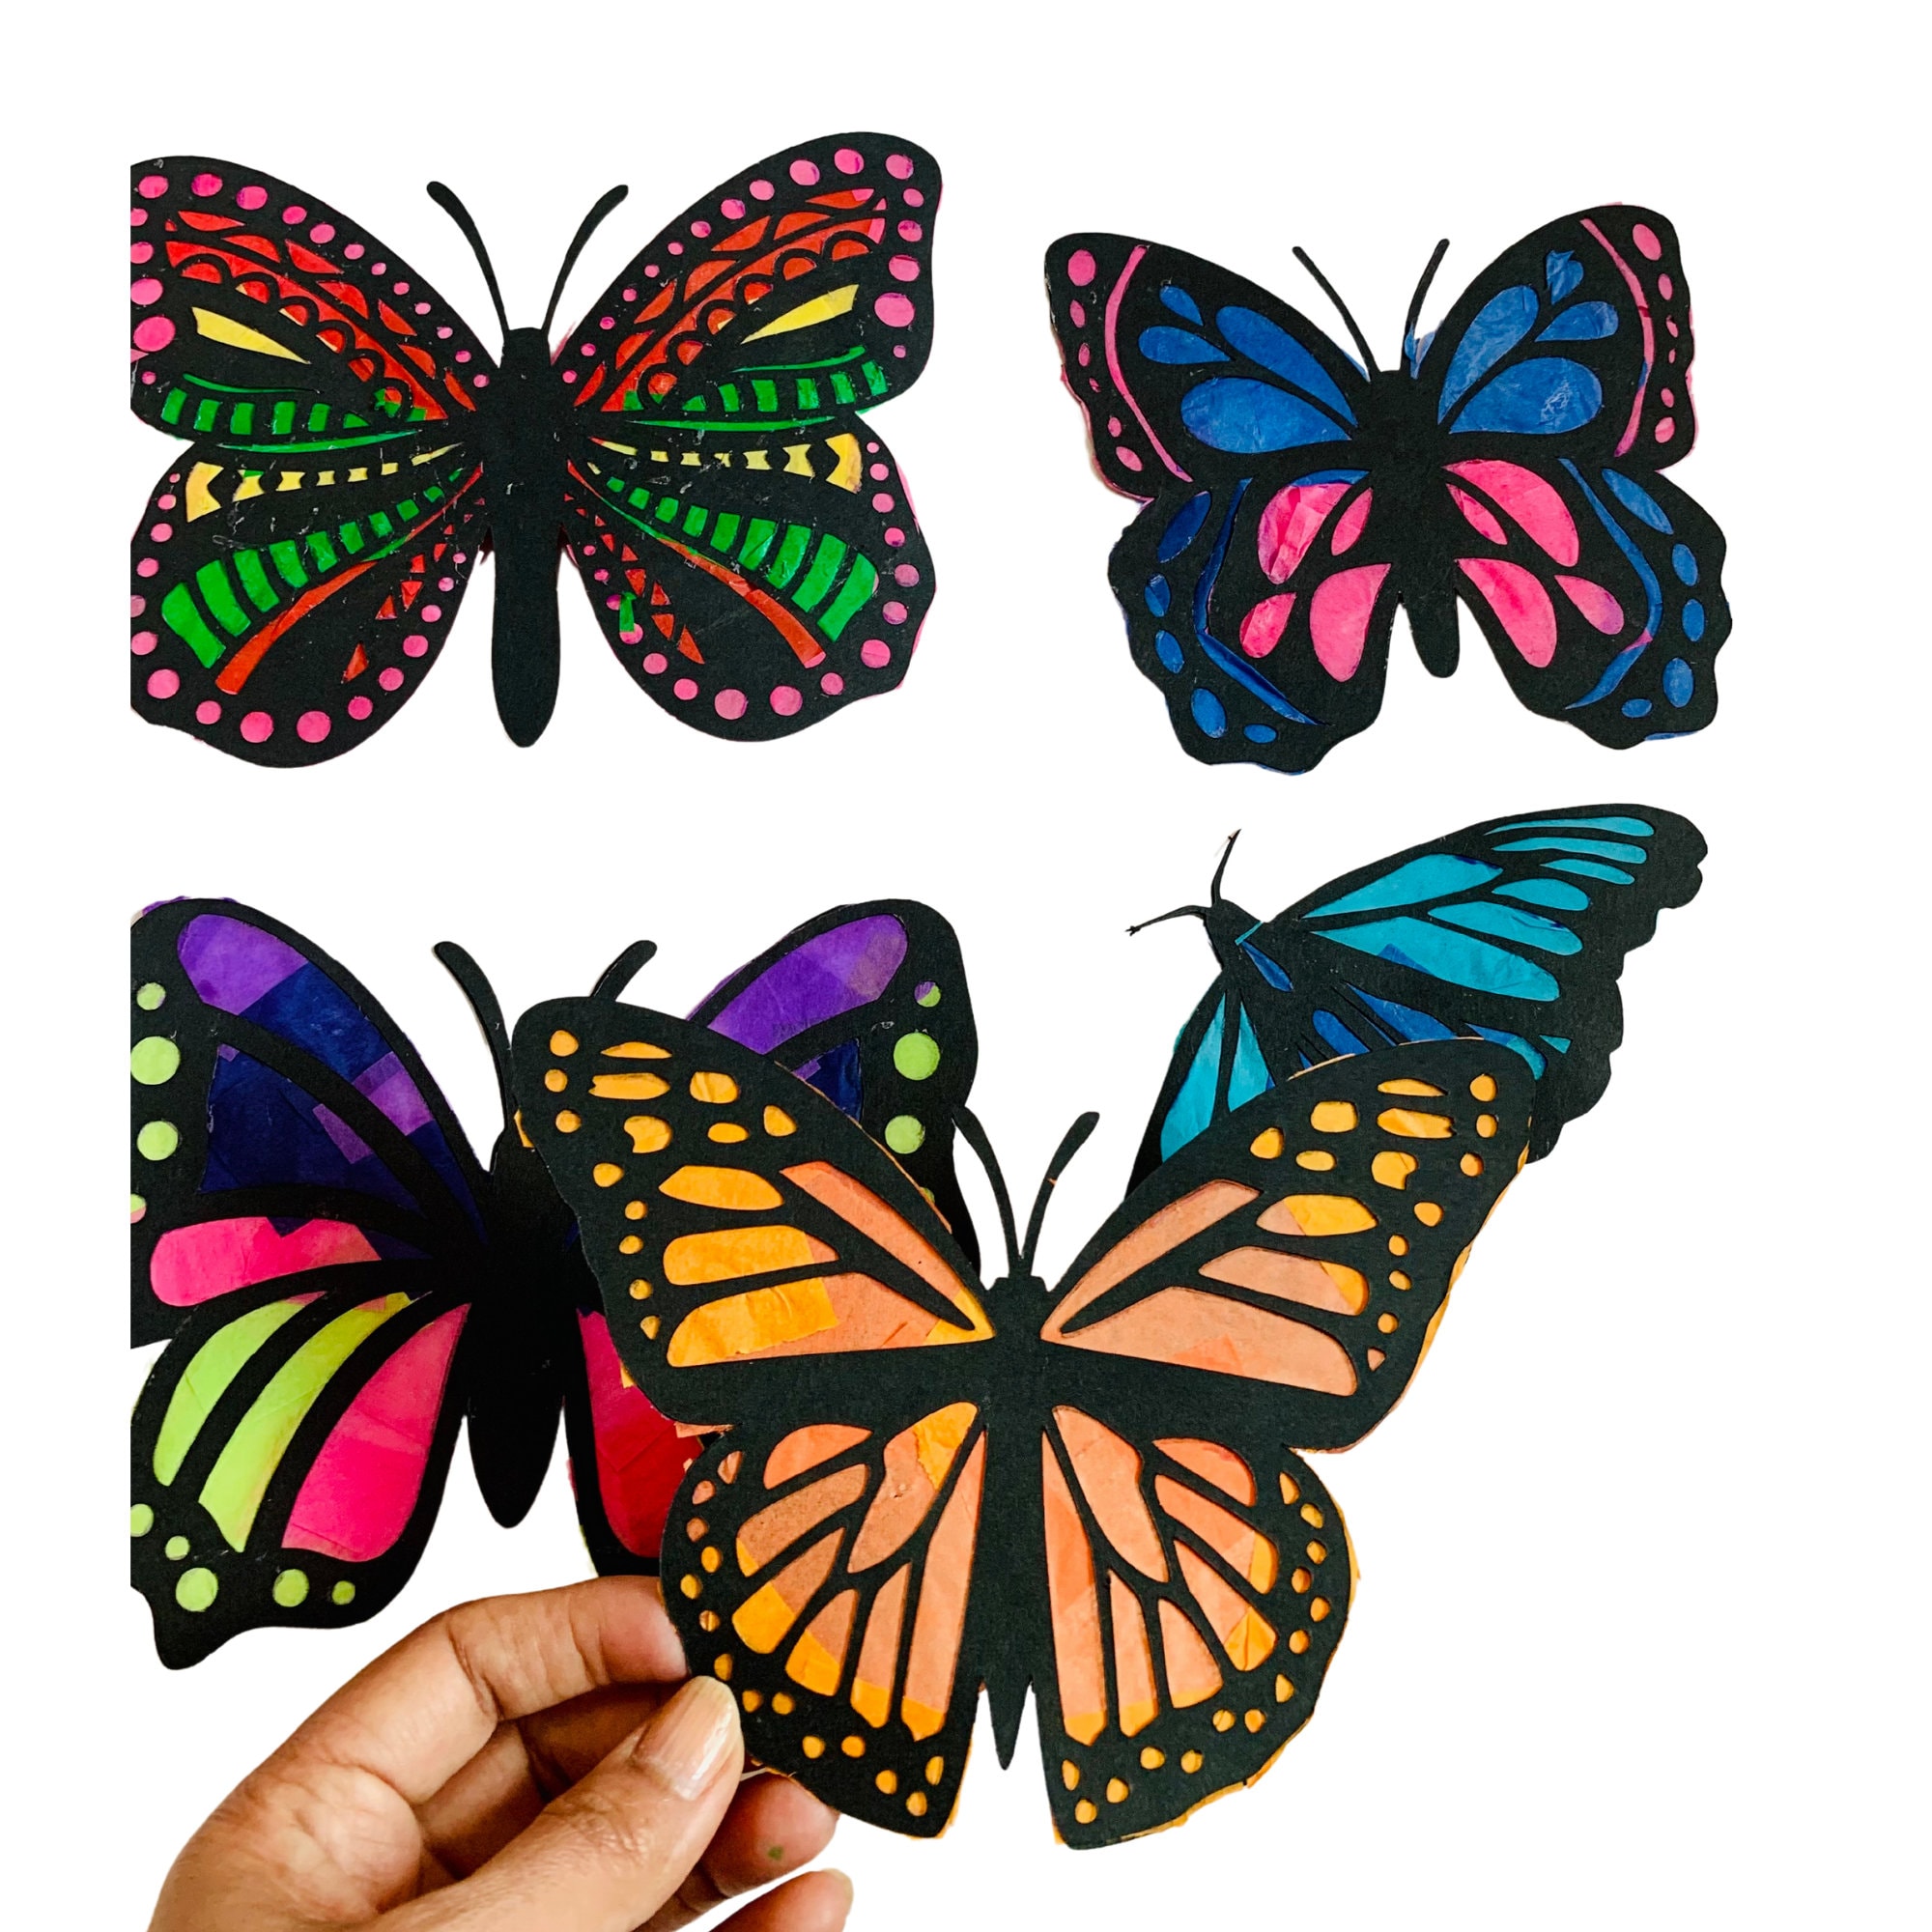 Tissue Paper Butterflies - Fun DIY - oh partyland